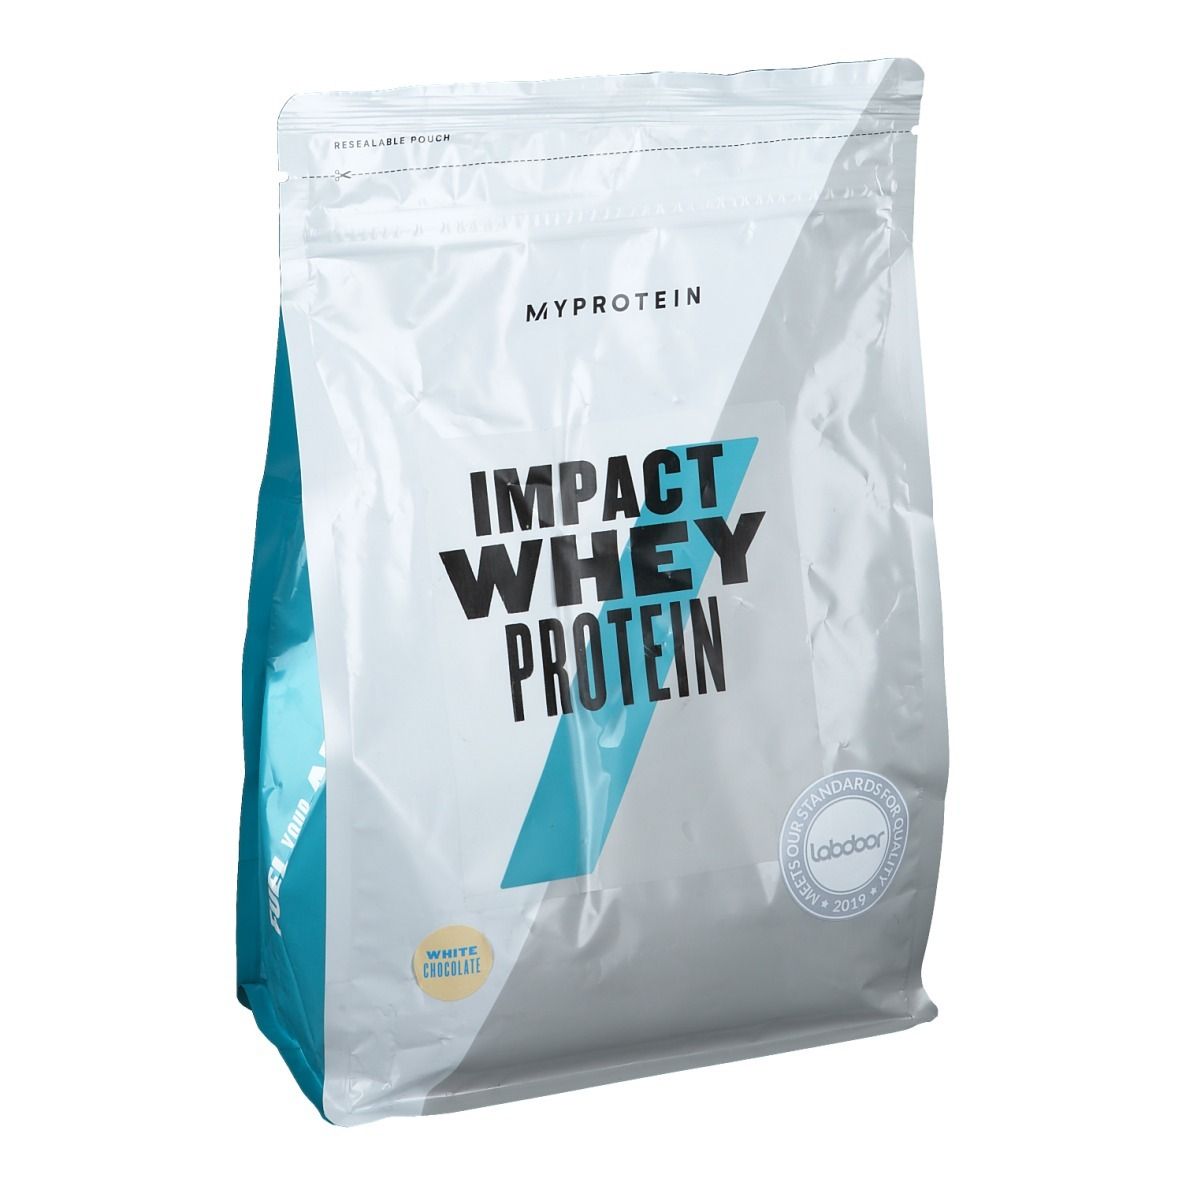 MyProtein Impact Whey Protein chocolat blanc